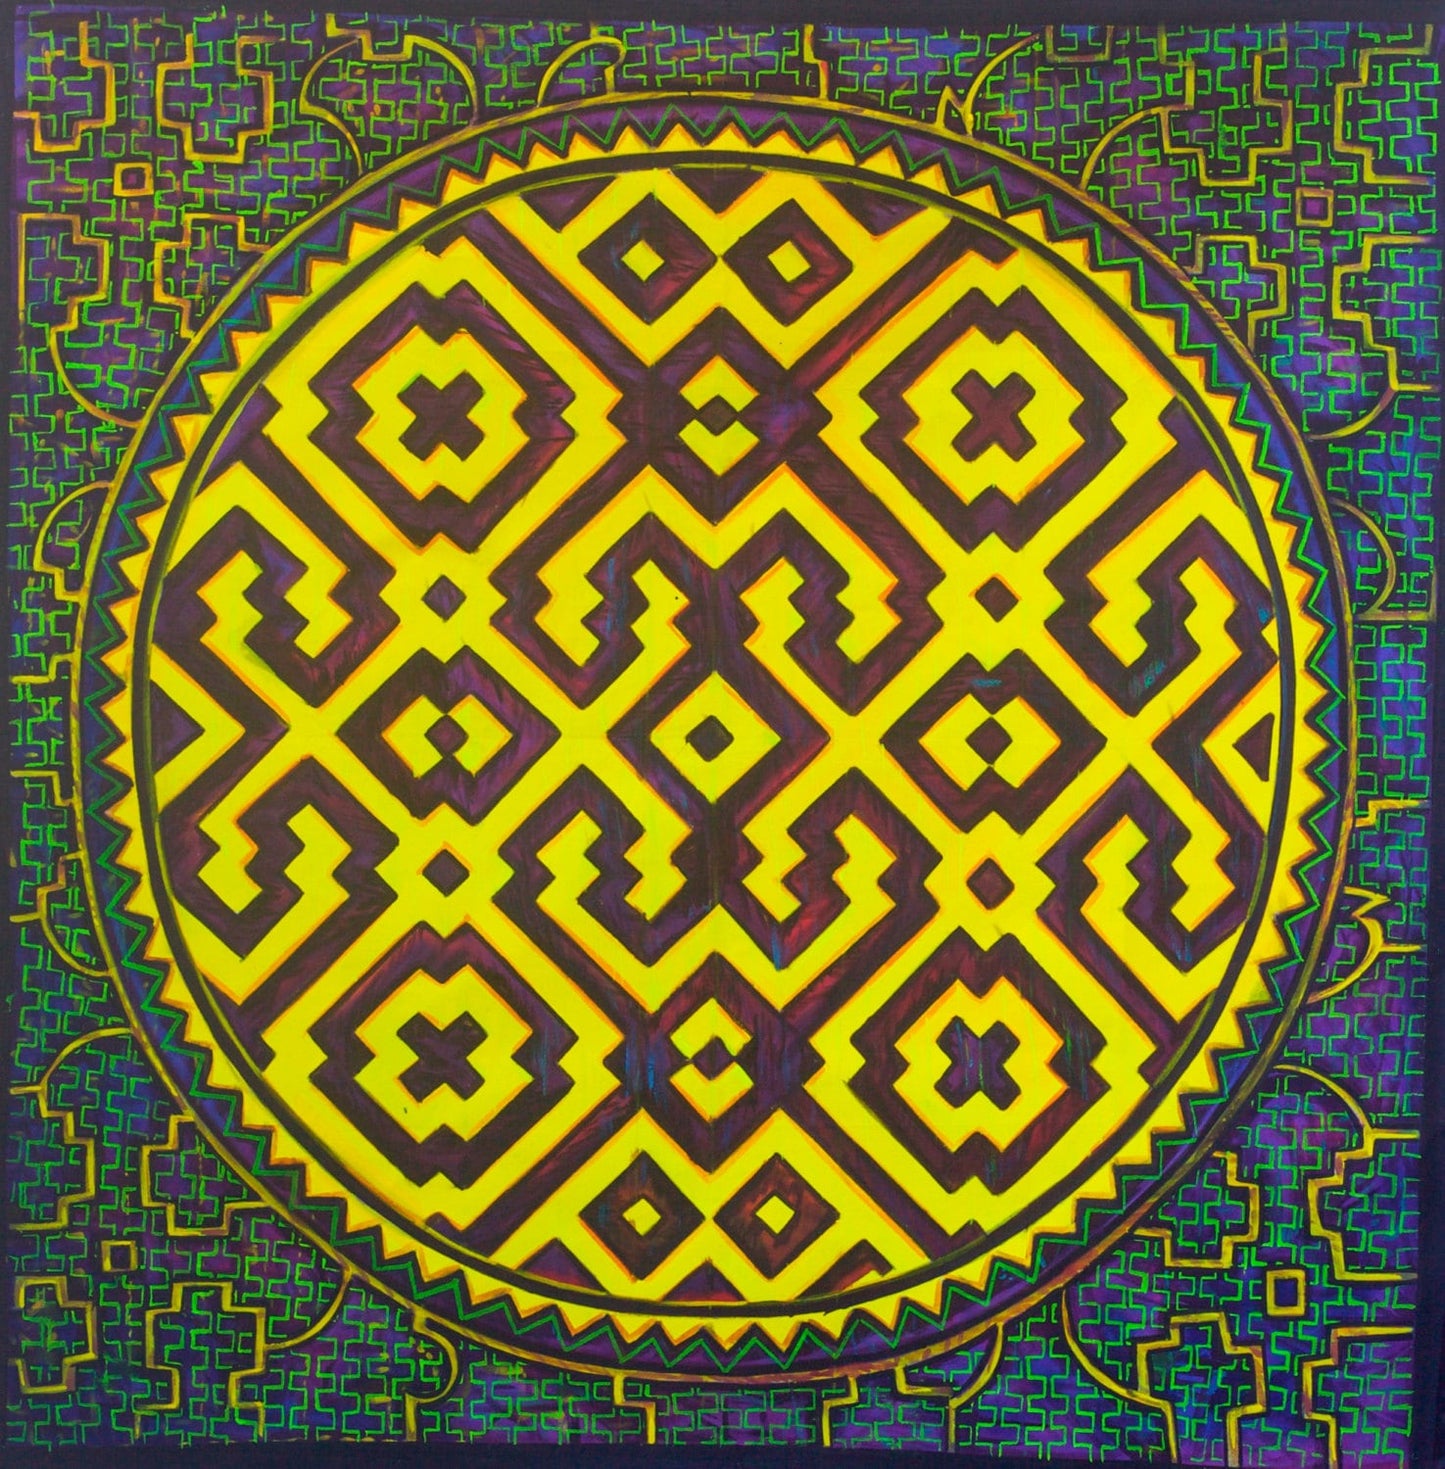 DMT visionary art UV painting - fully blacklight glowing colors - psychedelic shipibo conibo ayahuasca artwork